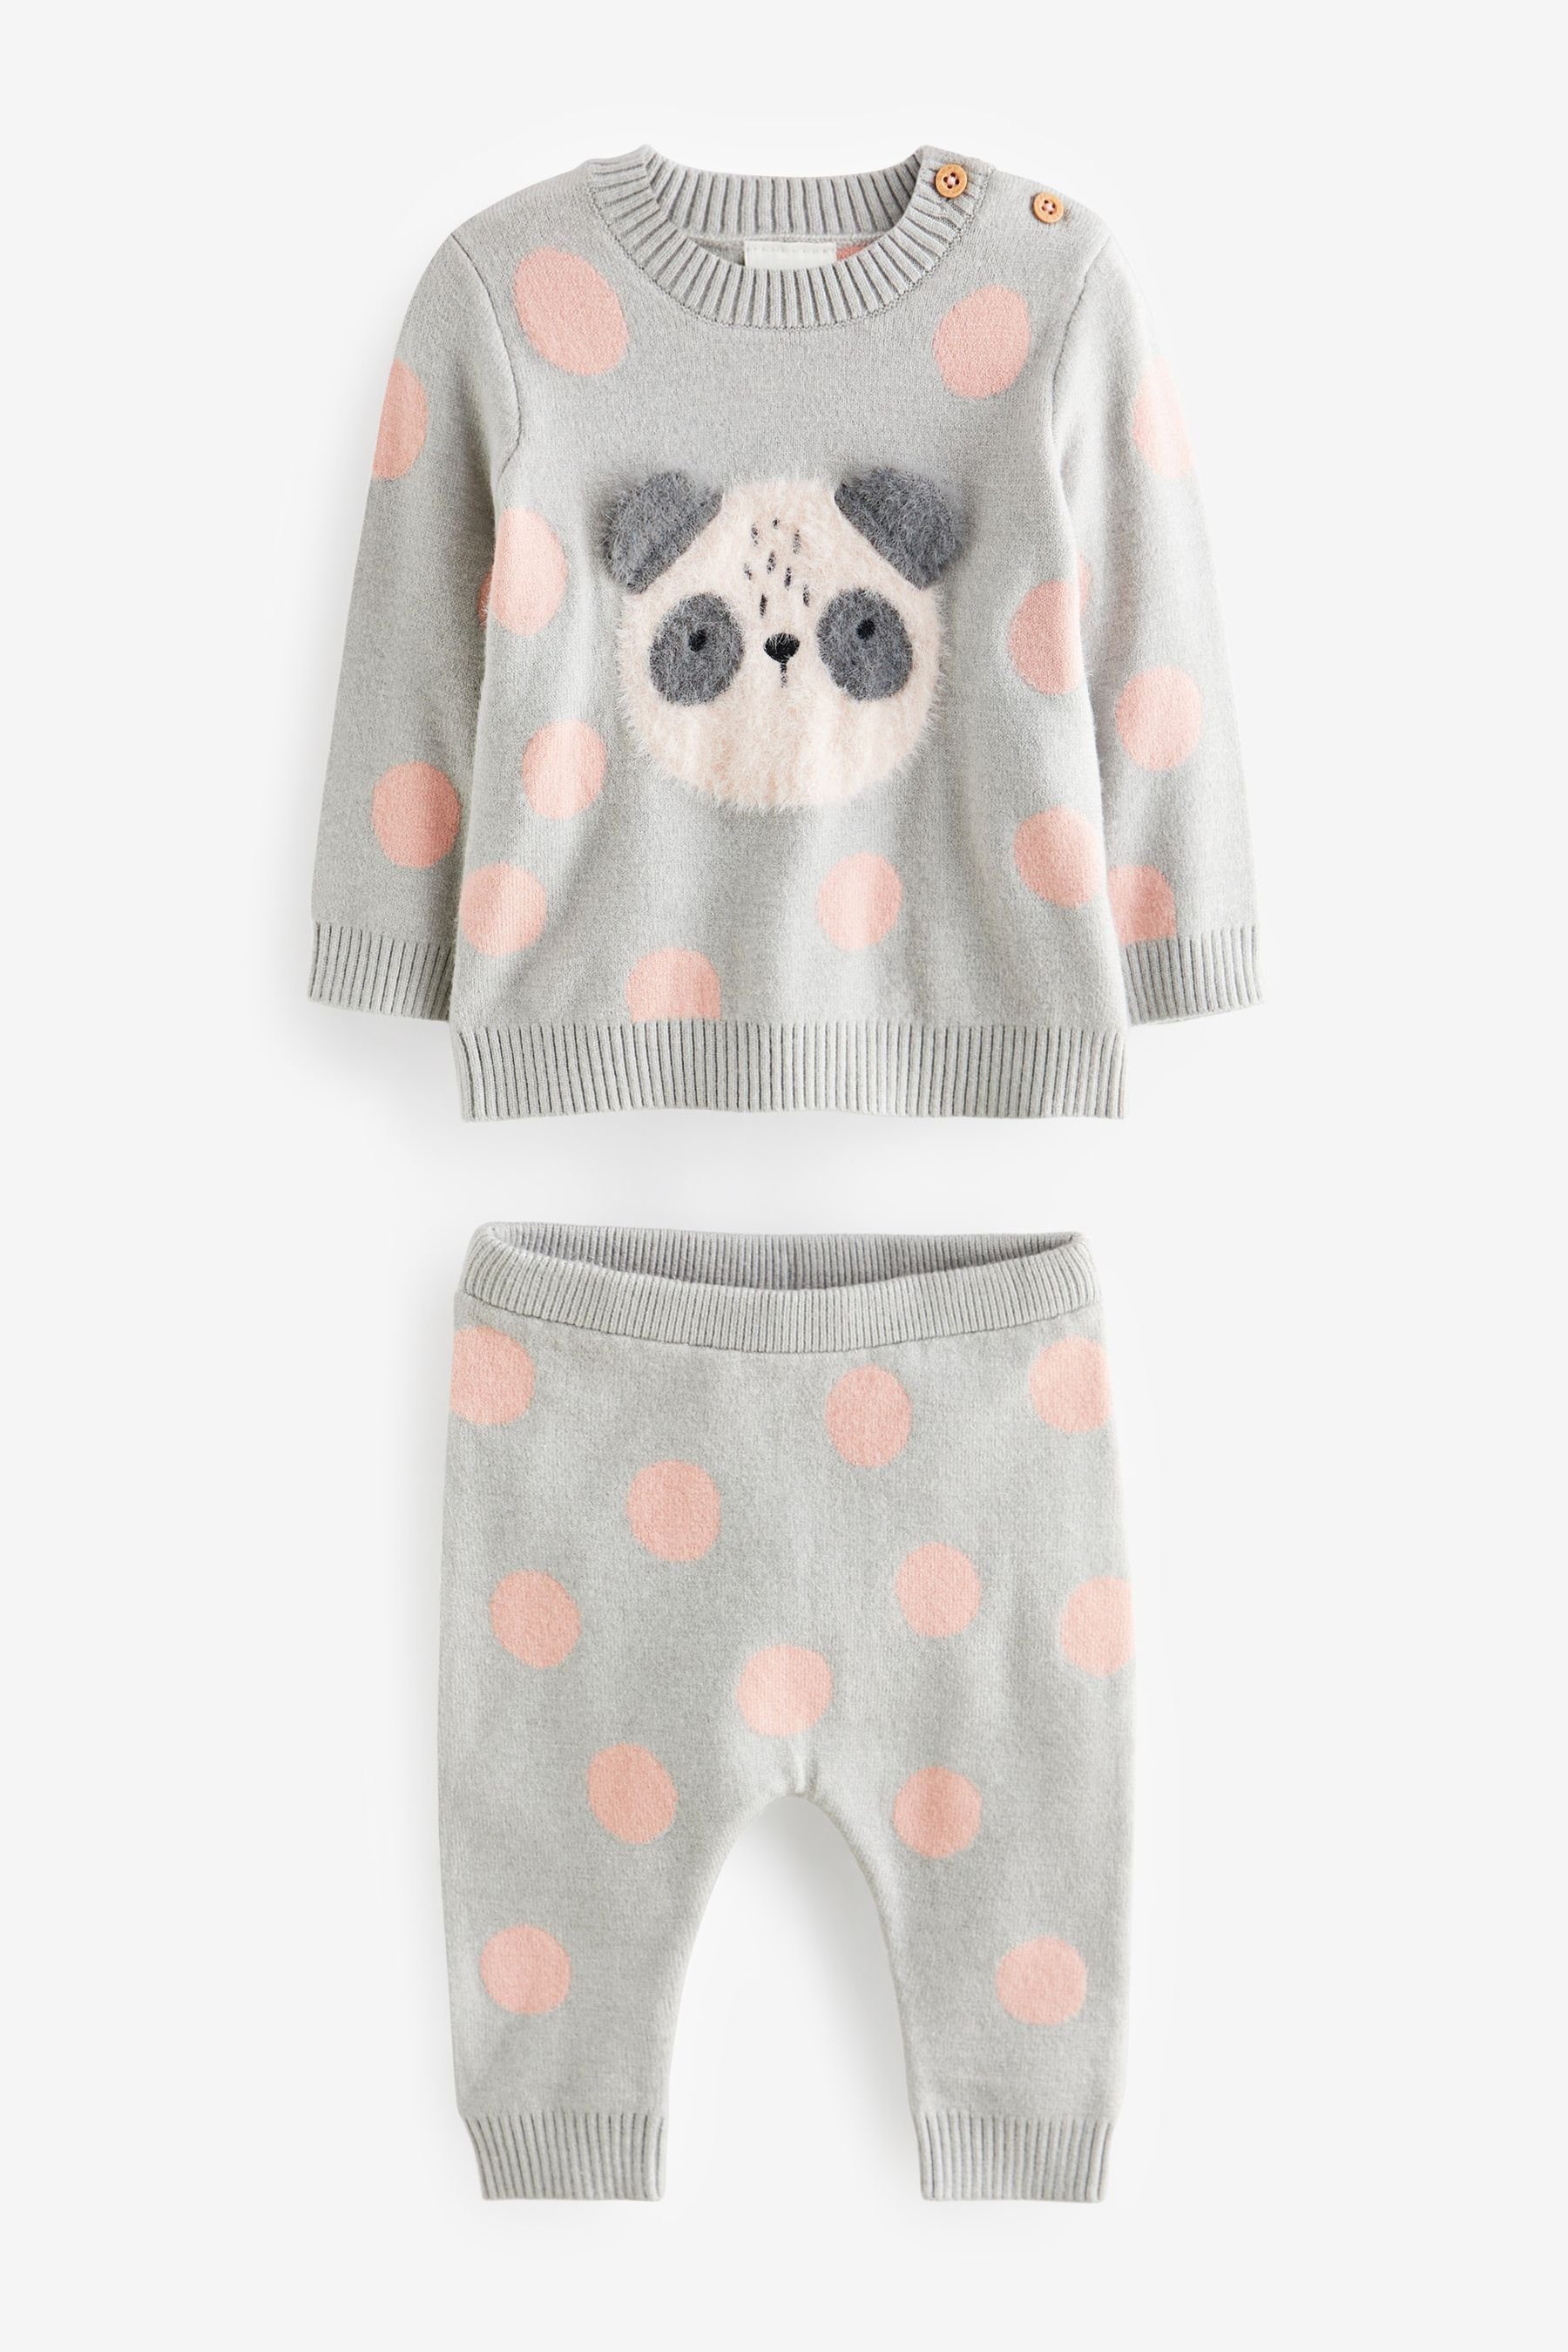 Next Strickpullover 2-teiliges Baby-Strickset (2-tlg) Grey/Pink Panda